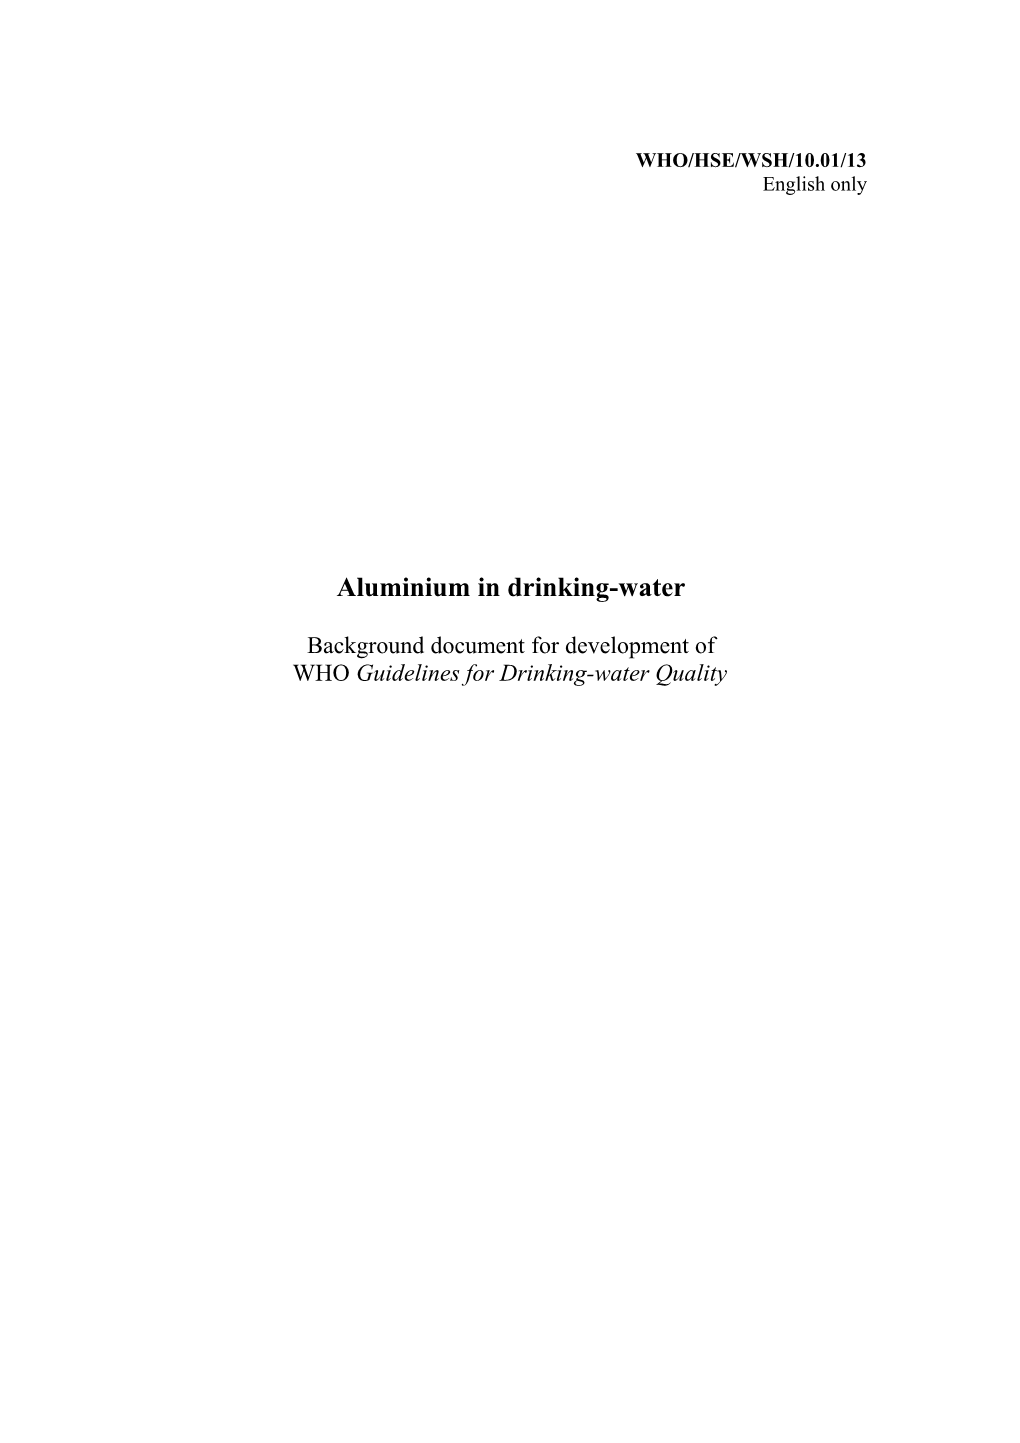 Aluminium in Drinking-Water